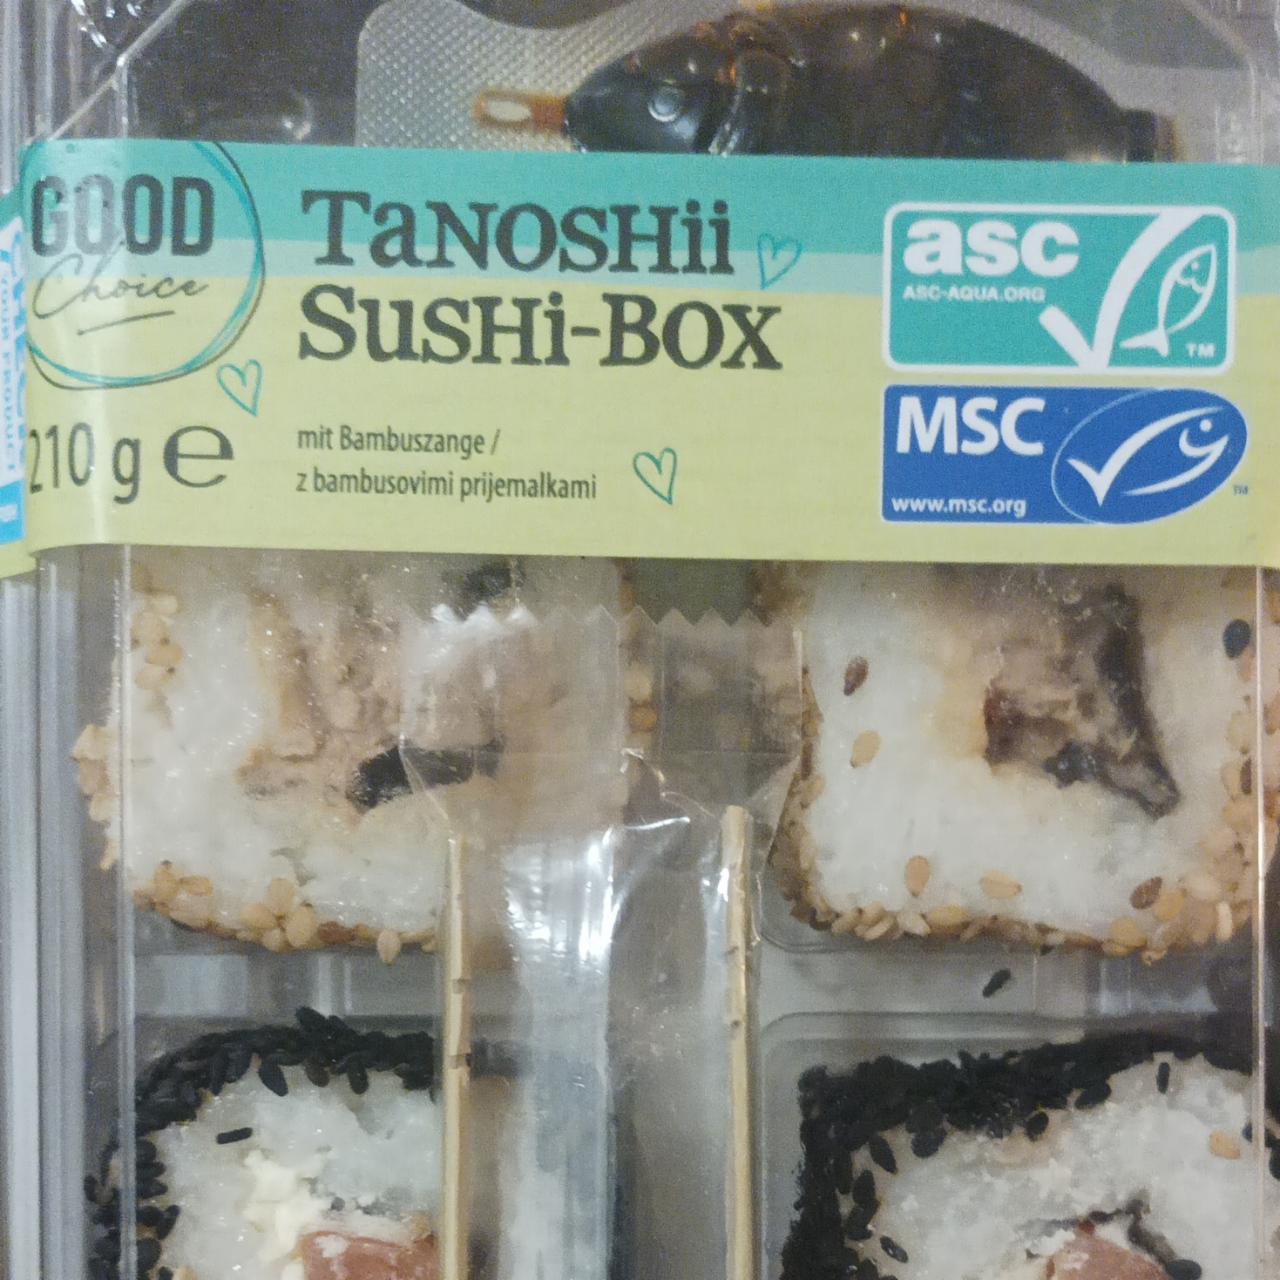 Fotografie - Tanoshii Sushi box Good choice